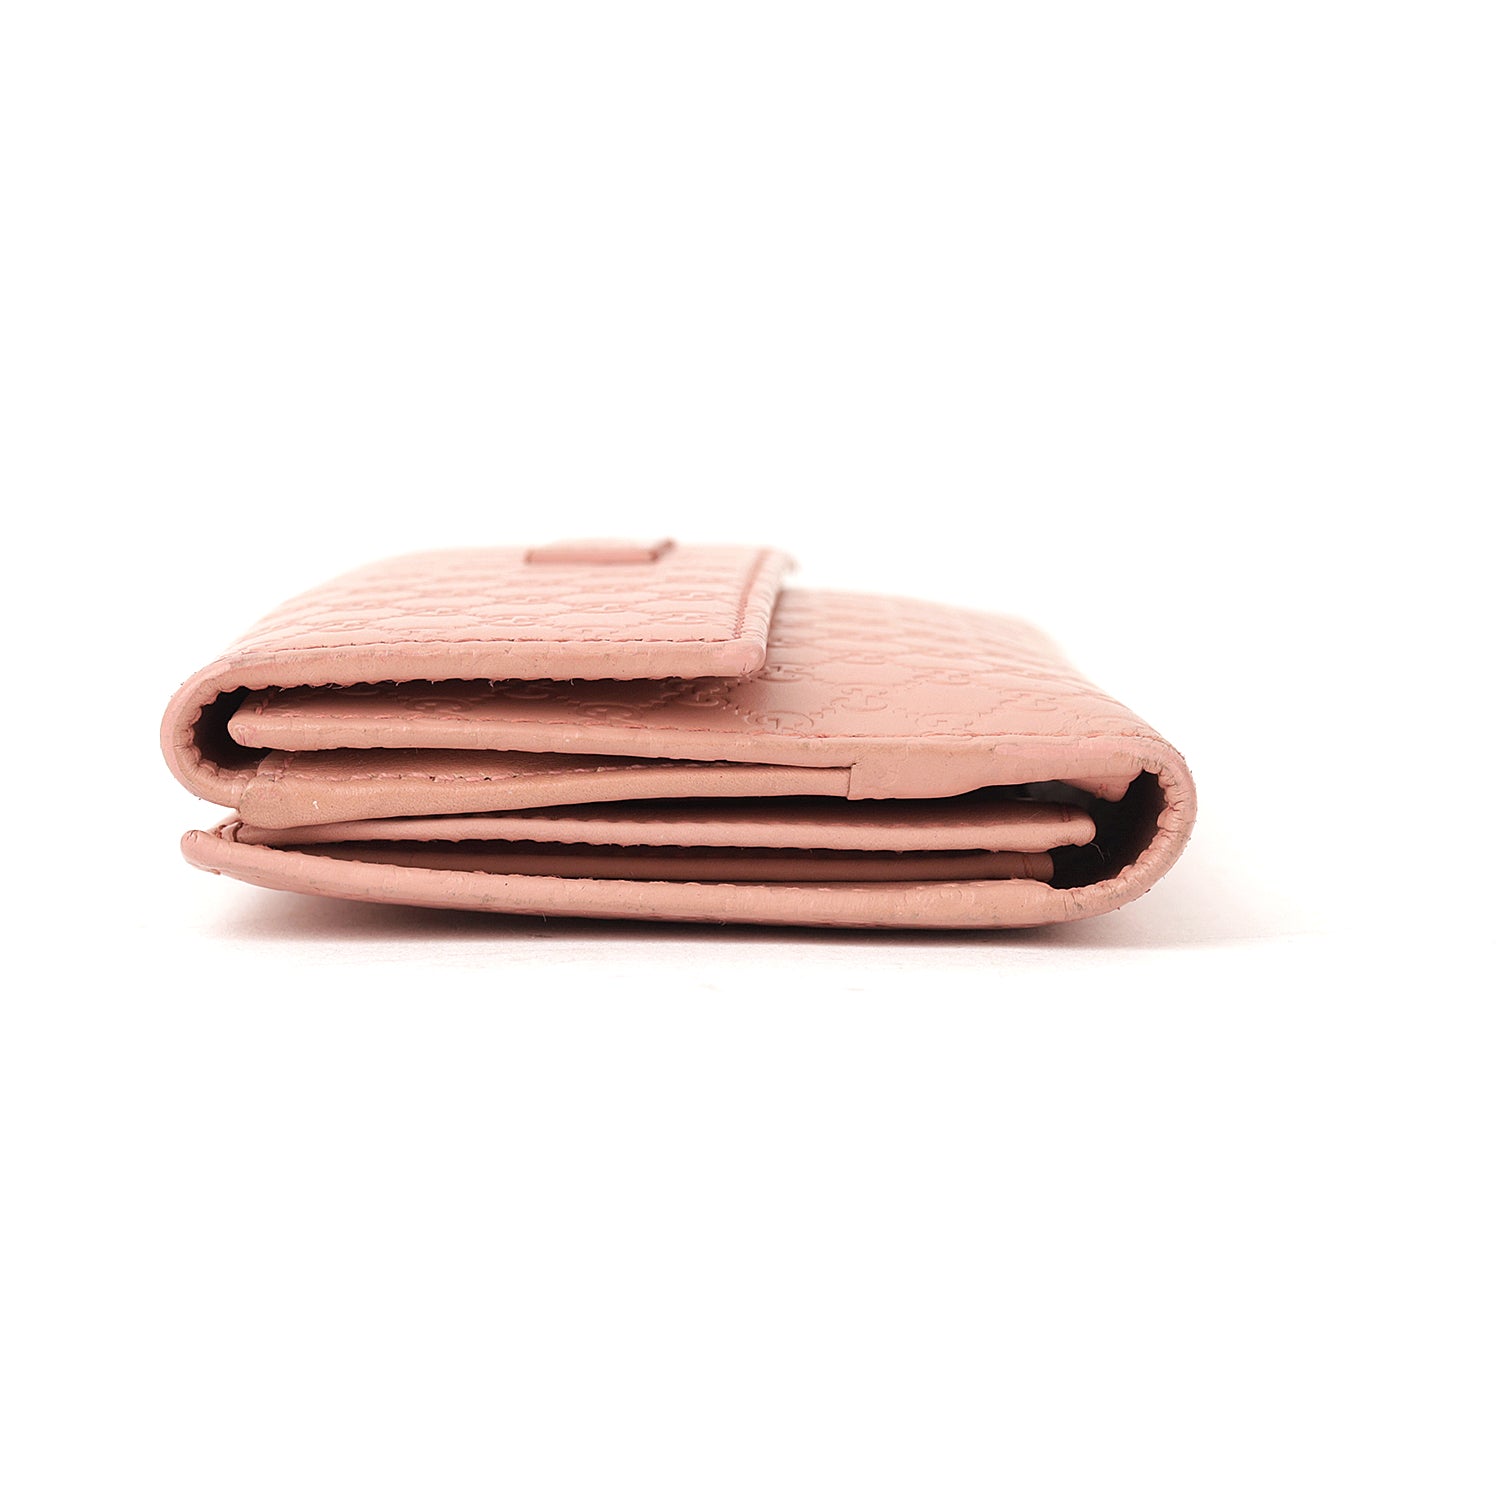 Gucci Microguccissima Continental Flap Wallet Soft Pink